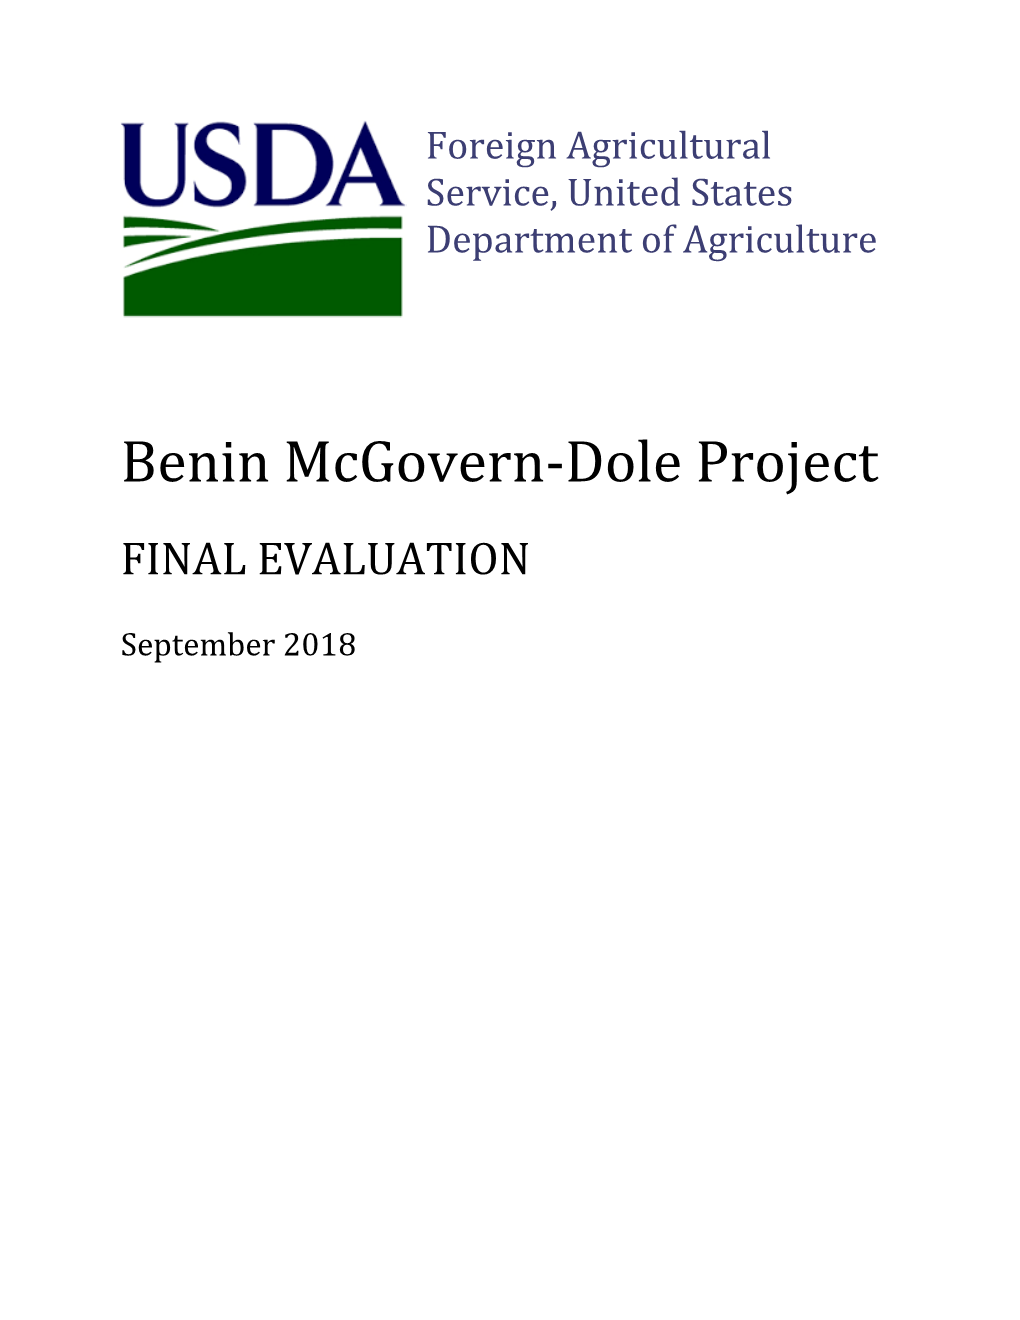 Benin Mcgovern-Dole Project